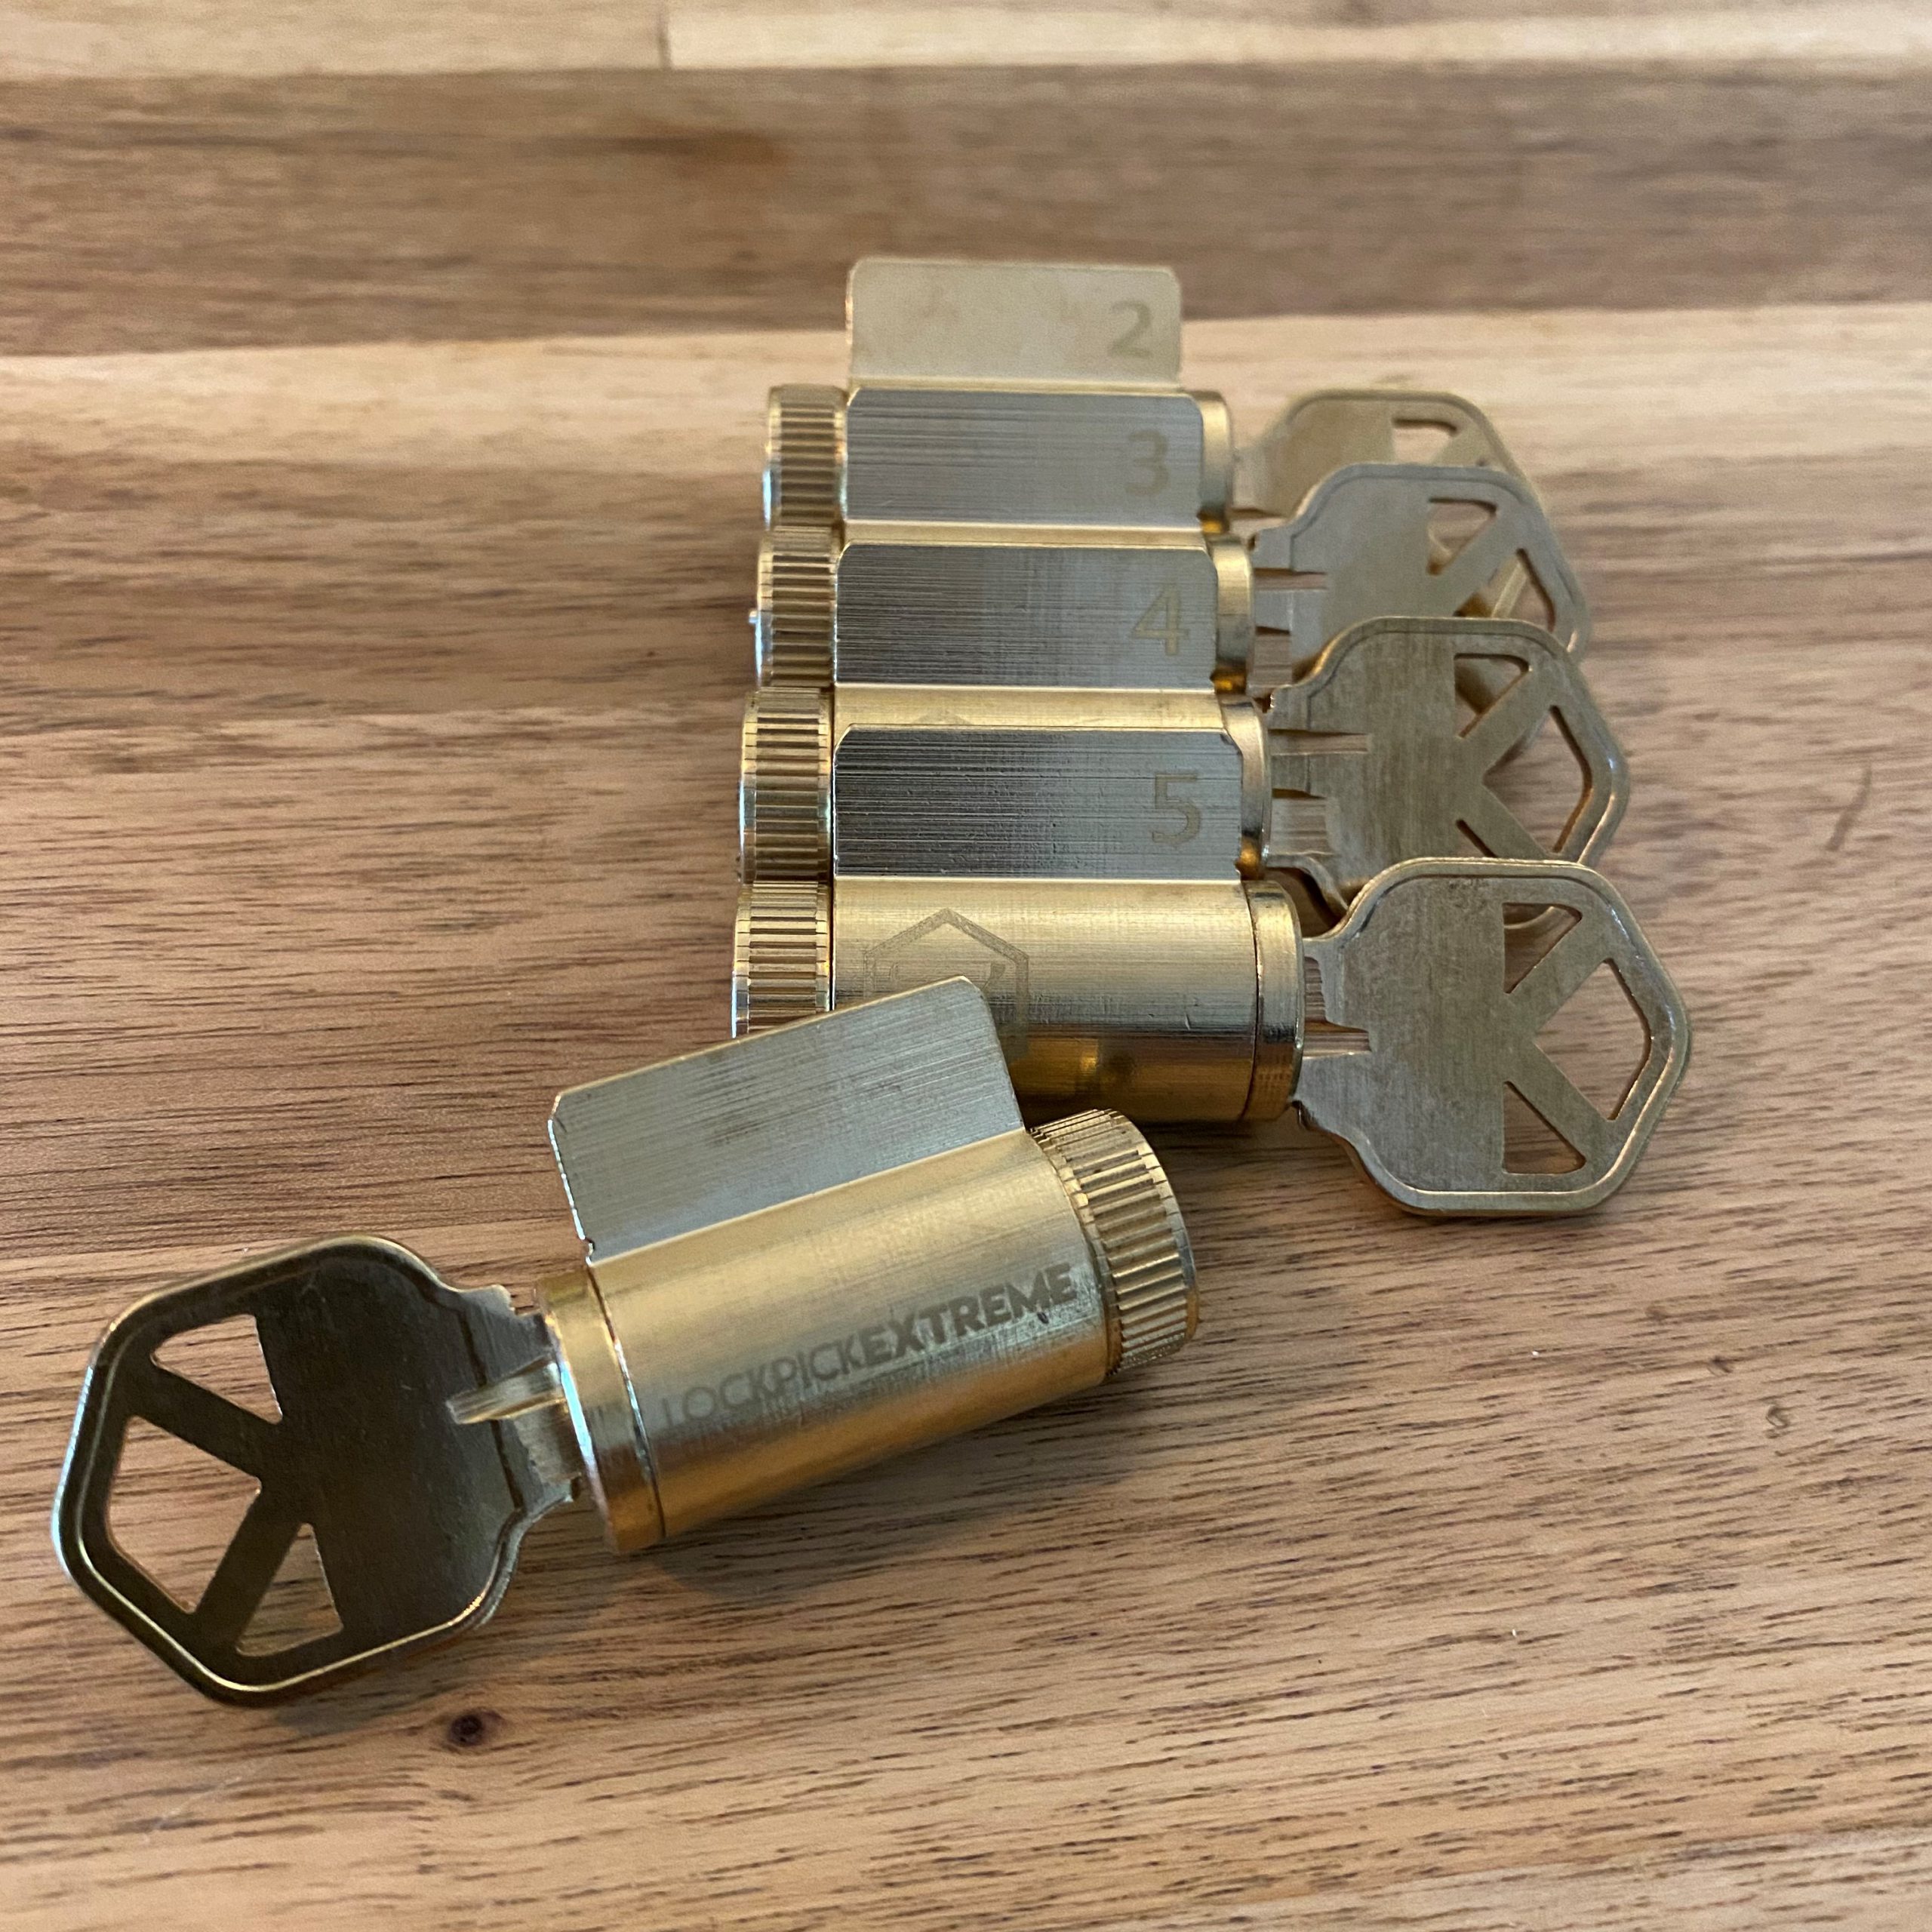 7 Pin All-In-One Lock Picking Training Kit